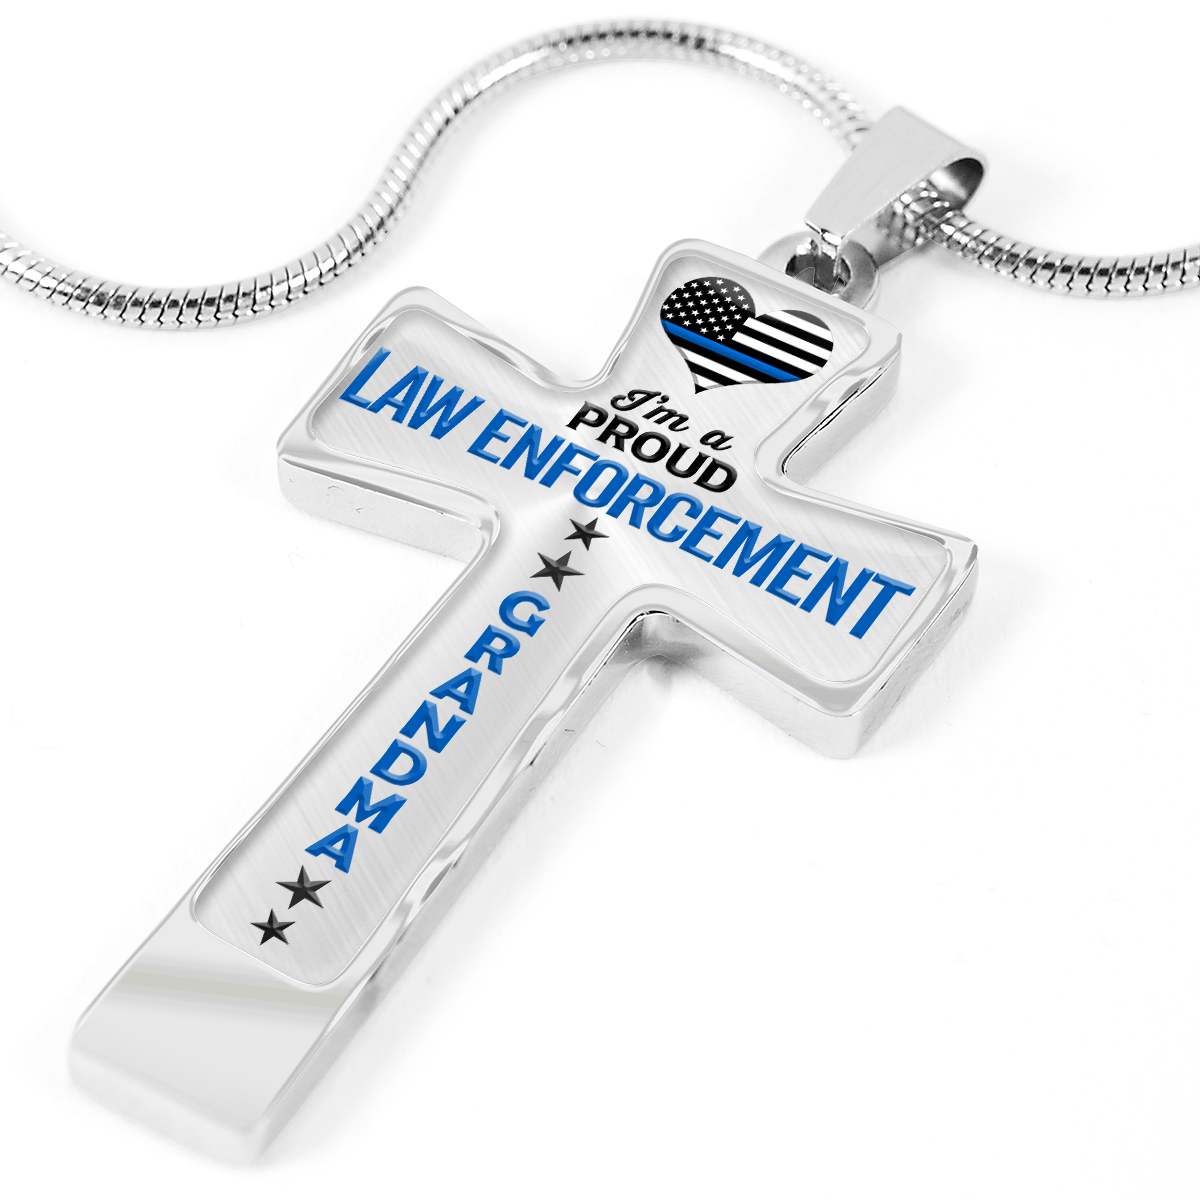 Proud Law Enforcement Grandma Cross Necklace - Heroic Defender